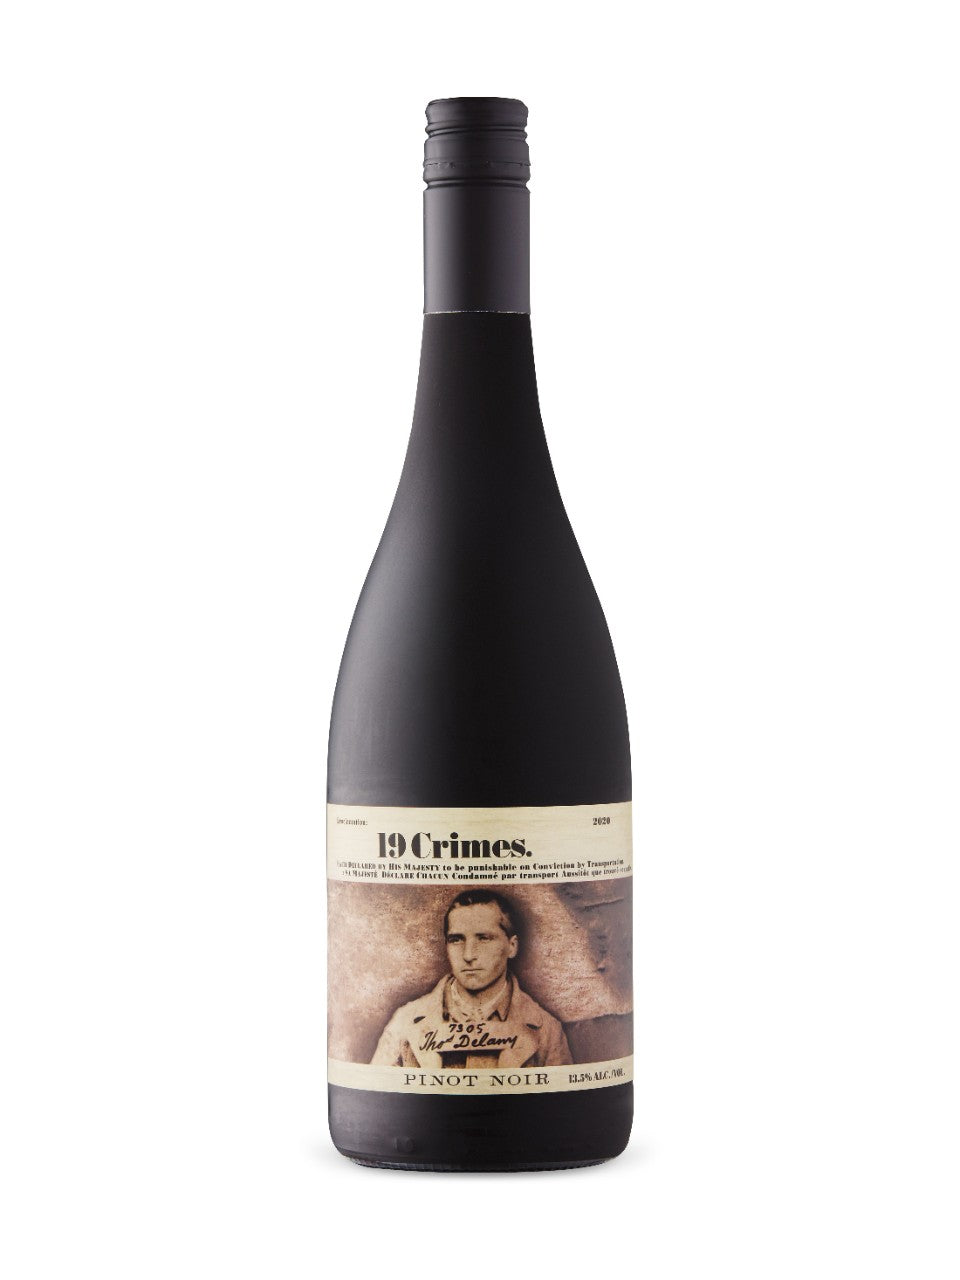 19 Crimes Pinot Noir 750 ml bottle